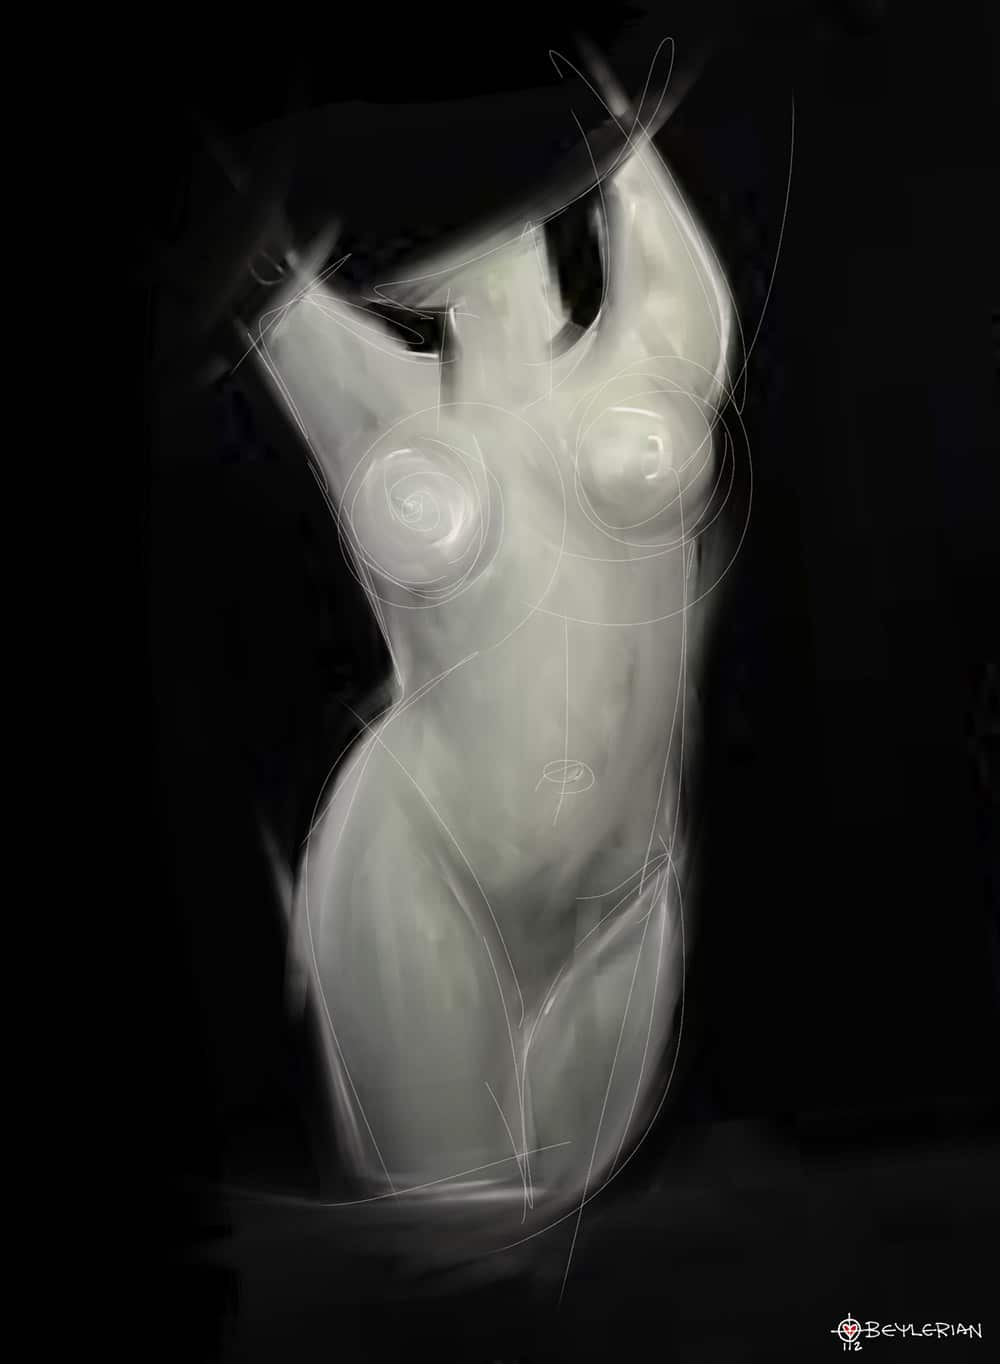 ipad created nude art